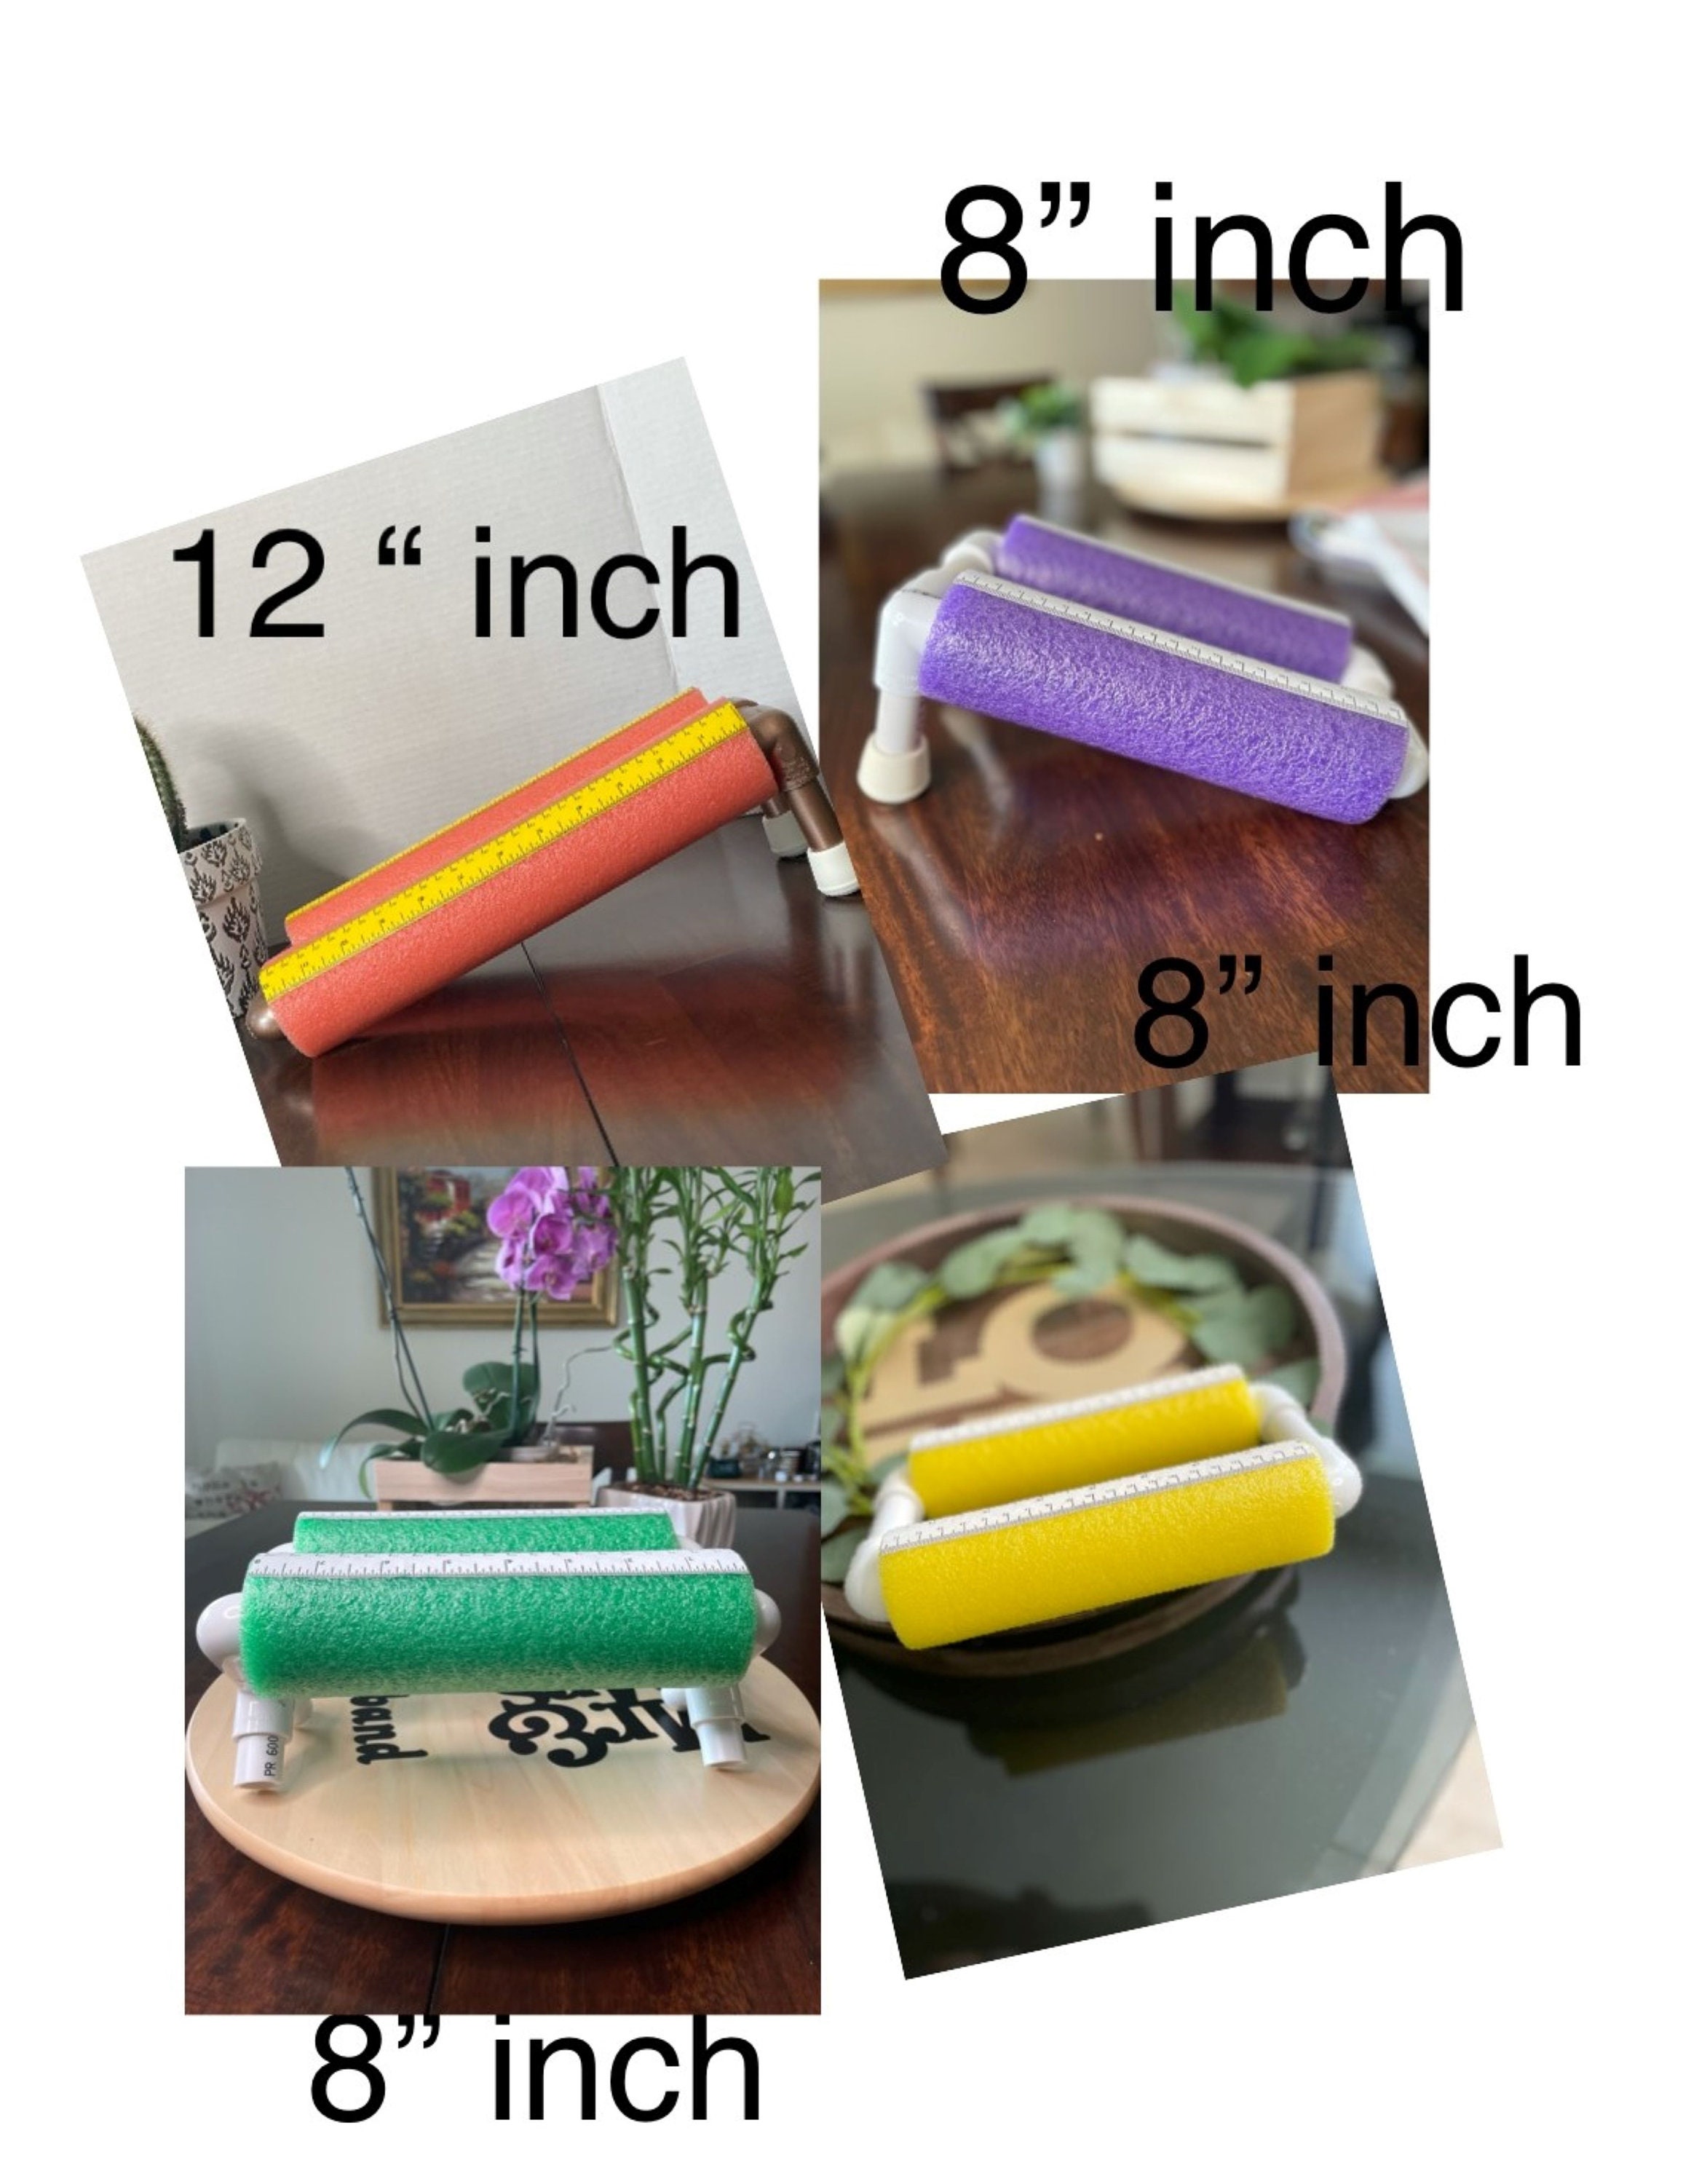 Tumbler Holder, 3d printed, cup holder, tumbler cradle, tumbler holder to  apply vinyl, tumbler tools, photo prop, tumbler stand